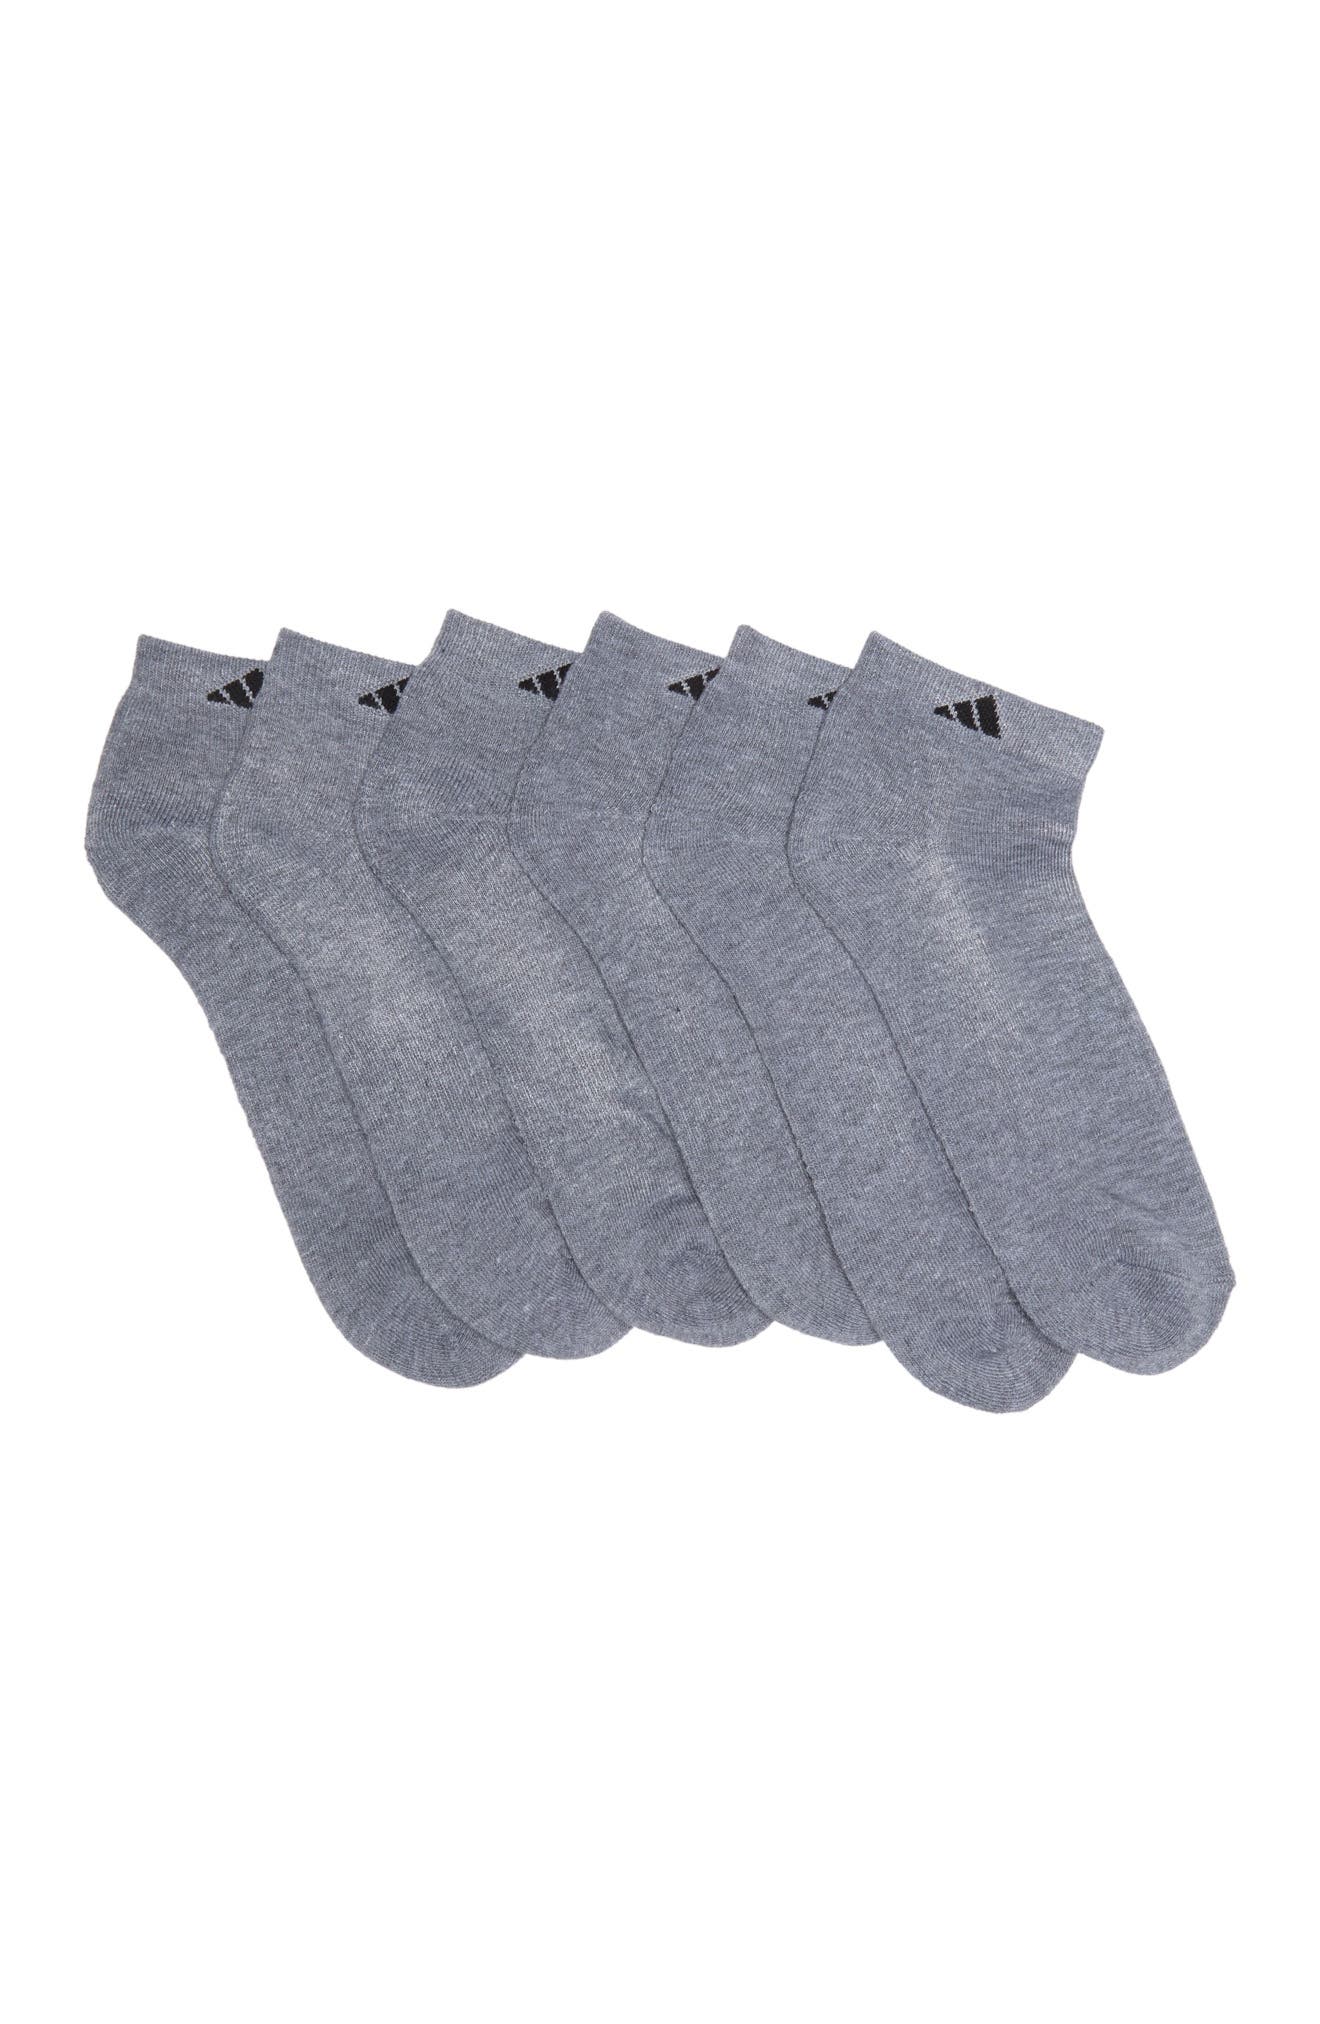 Agron Athletic Ankle Socks In Med Grey